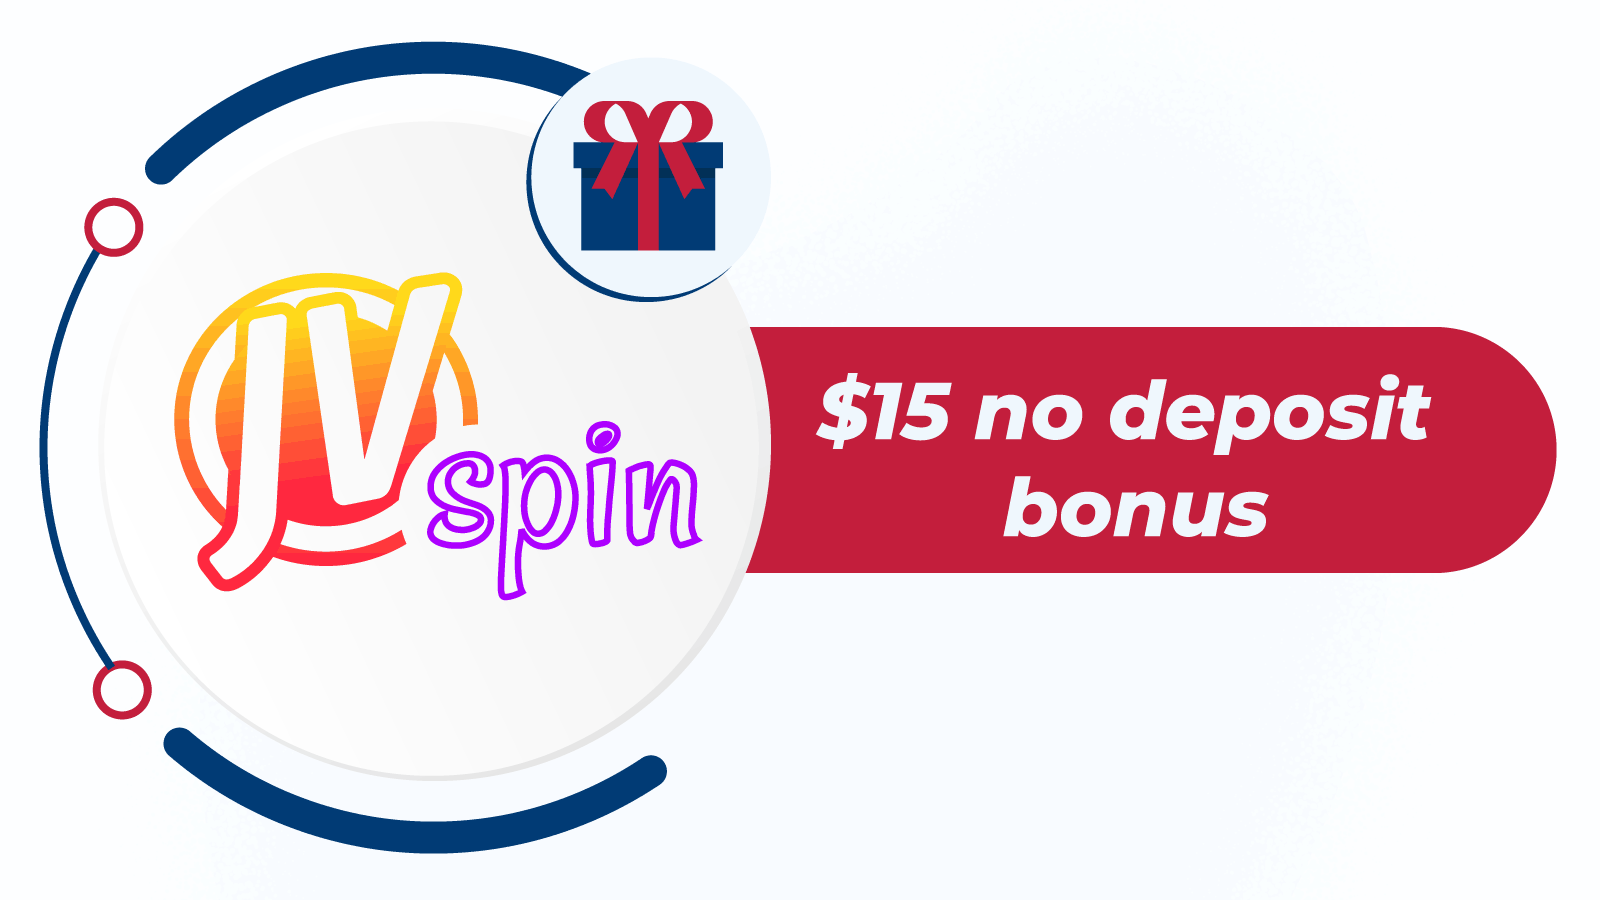 Why we chose JVSpin’s ¥15 no deposit bonus